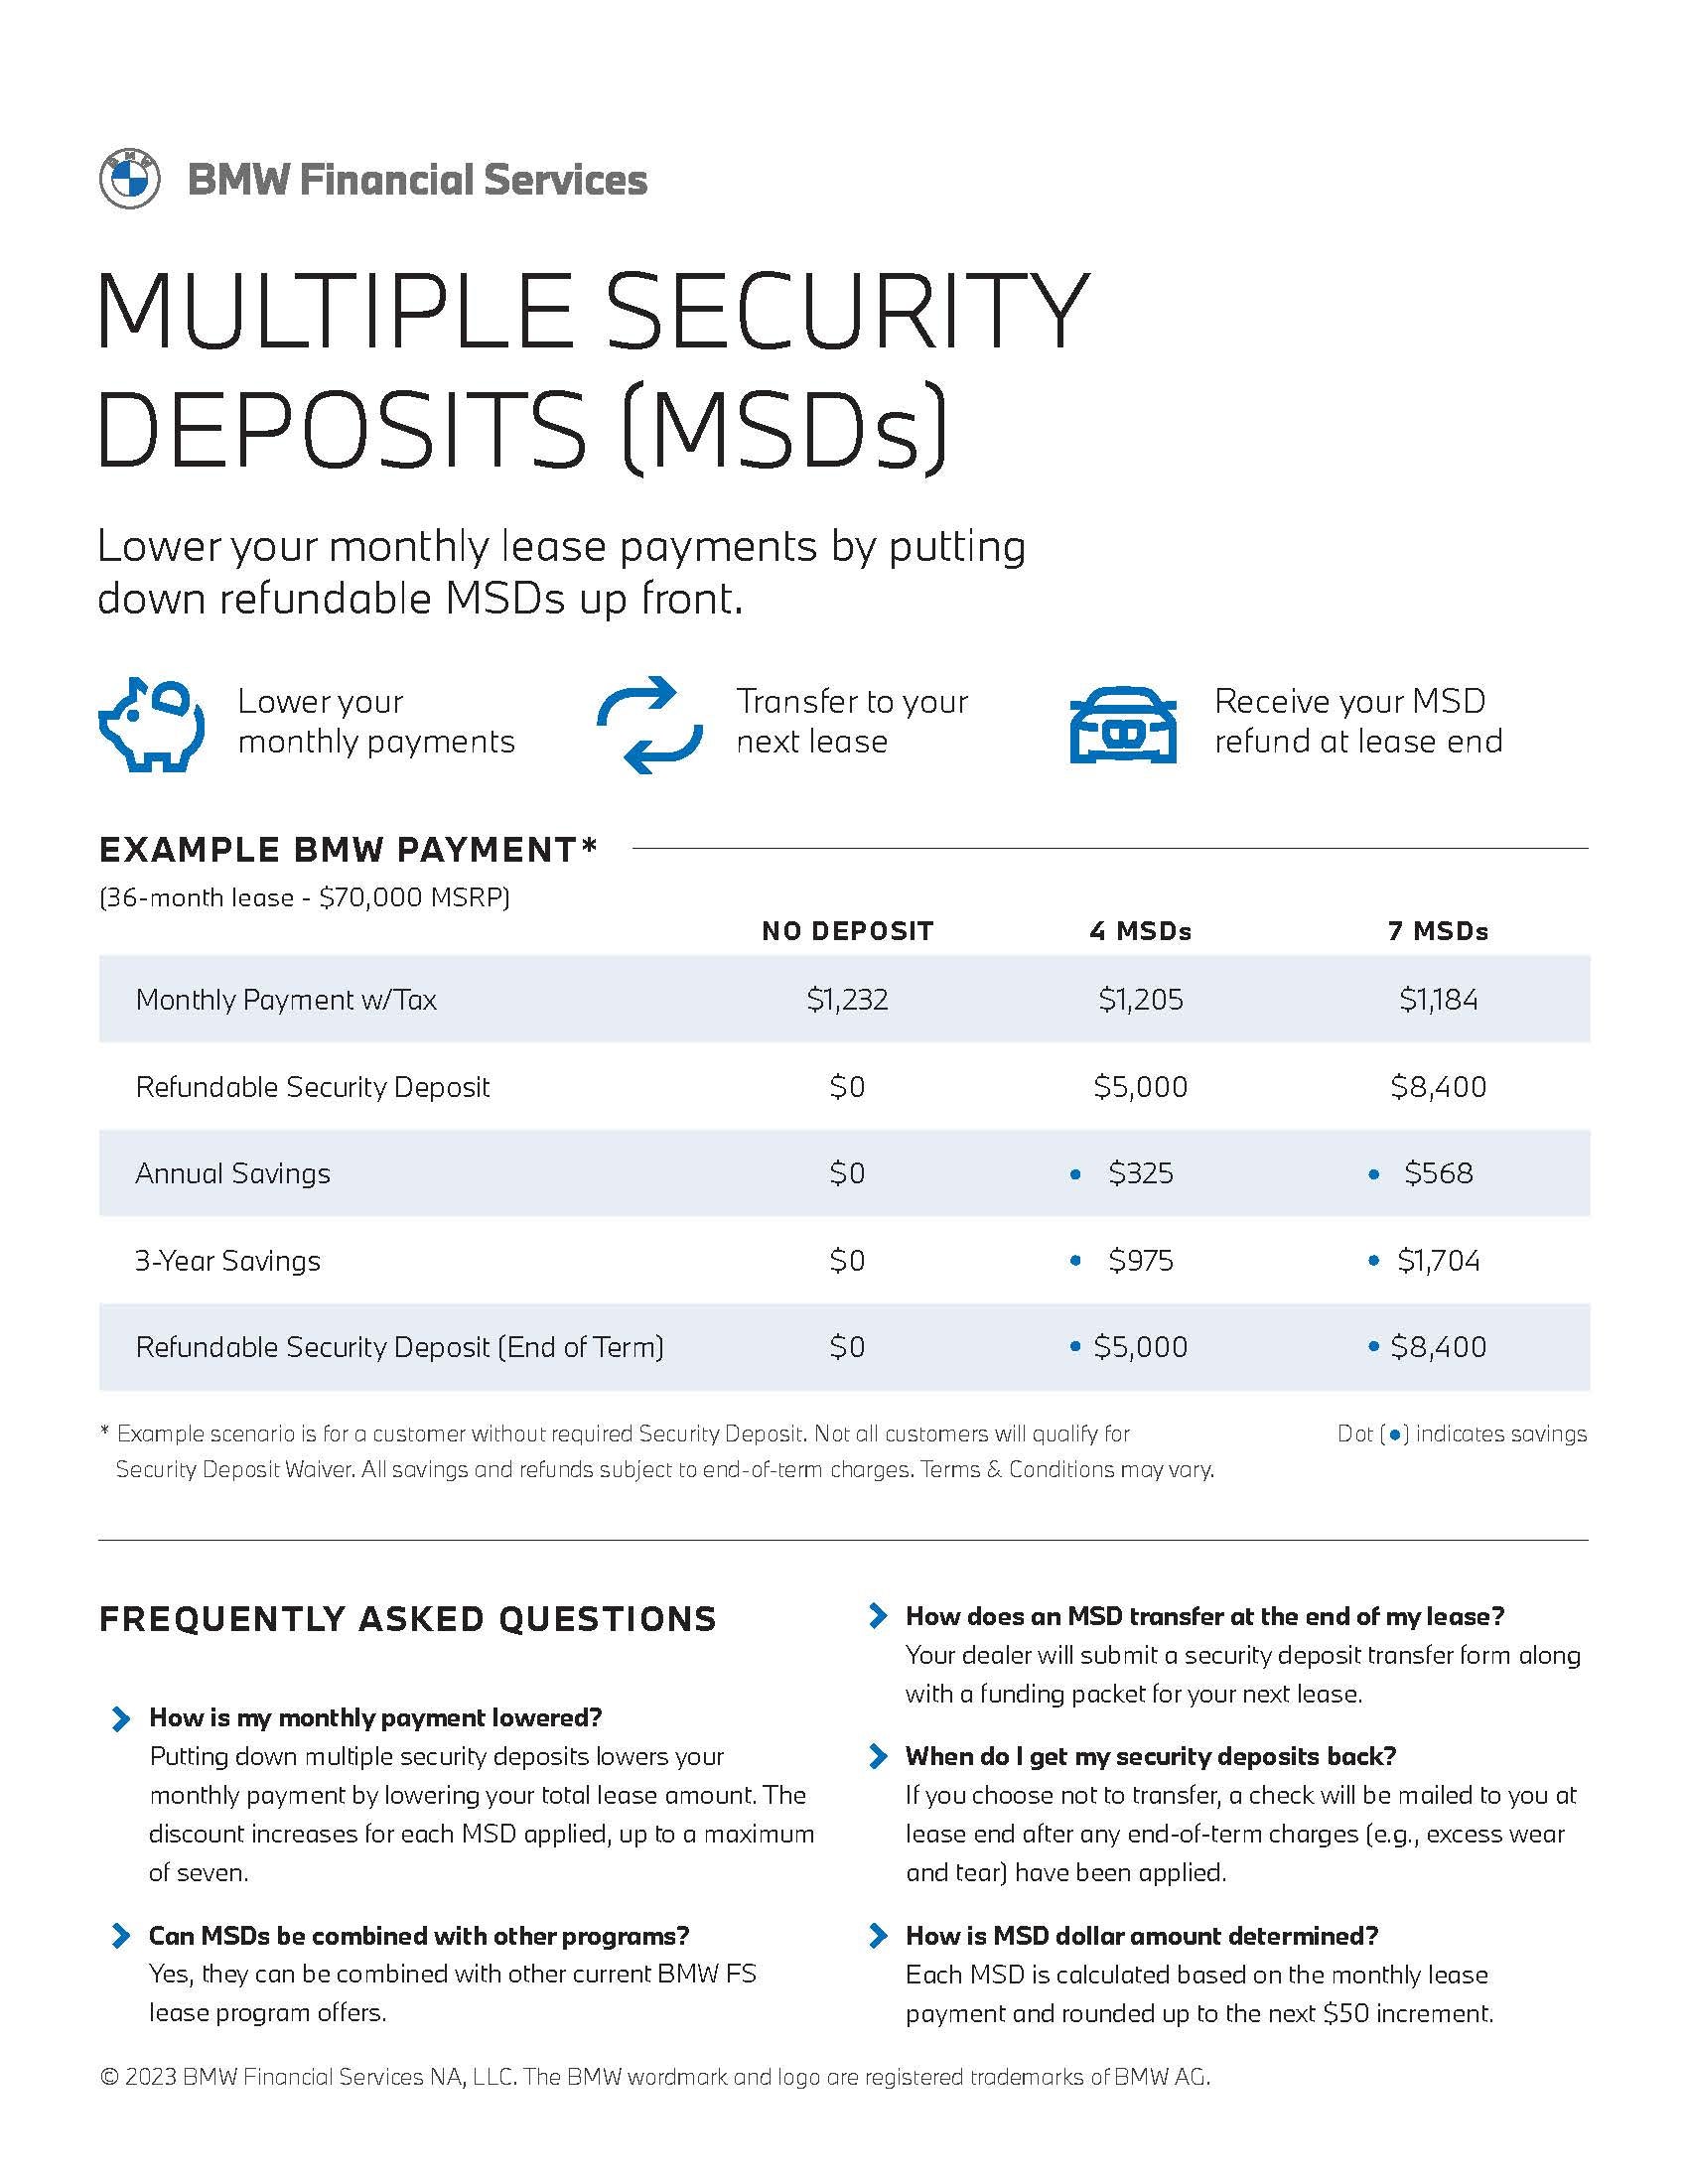 BMW Multiple Security Deposit